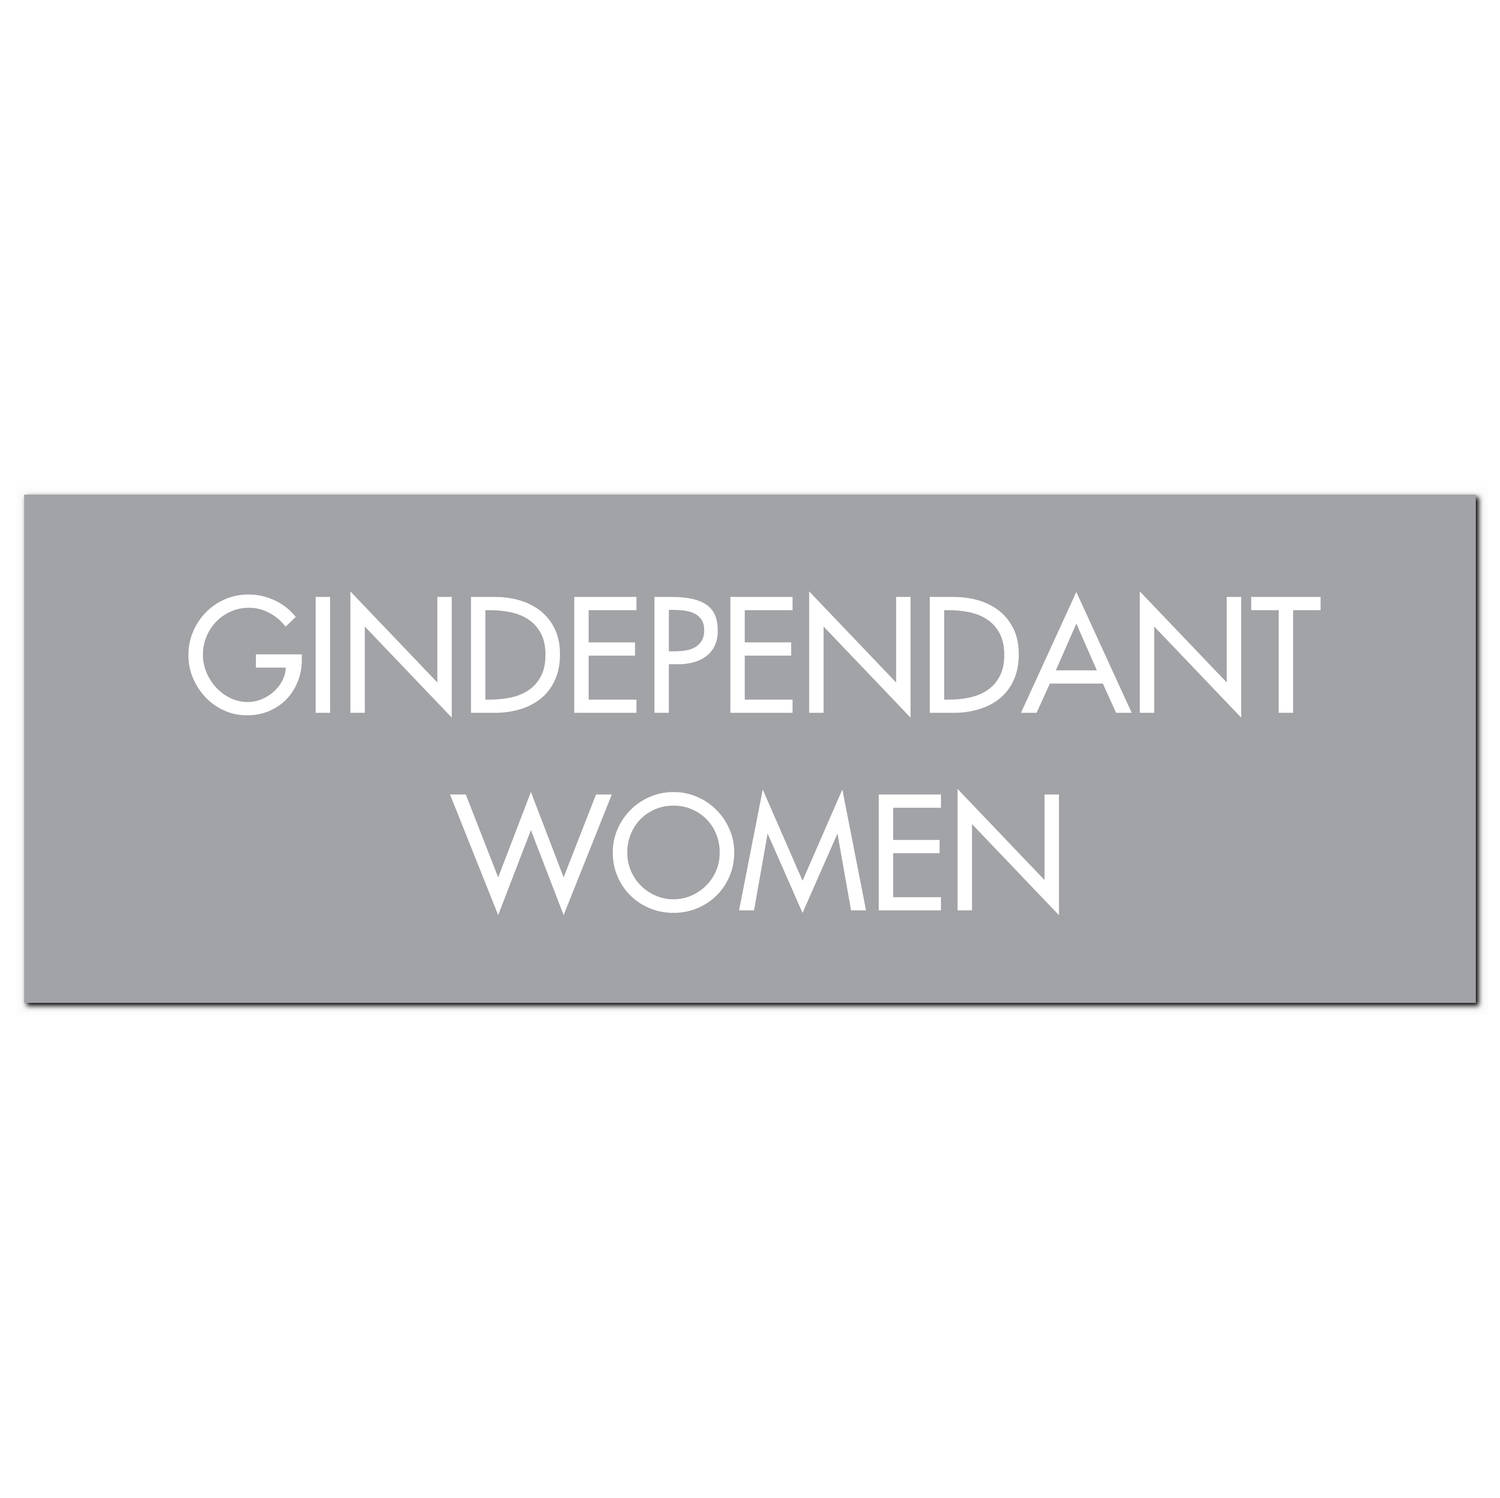 Gindependant Women Silver Foil Plaque - Image 1